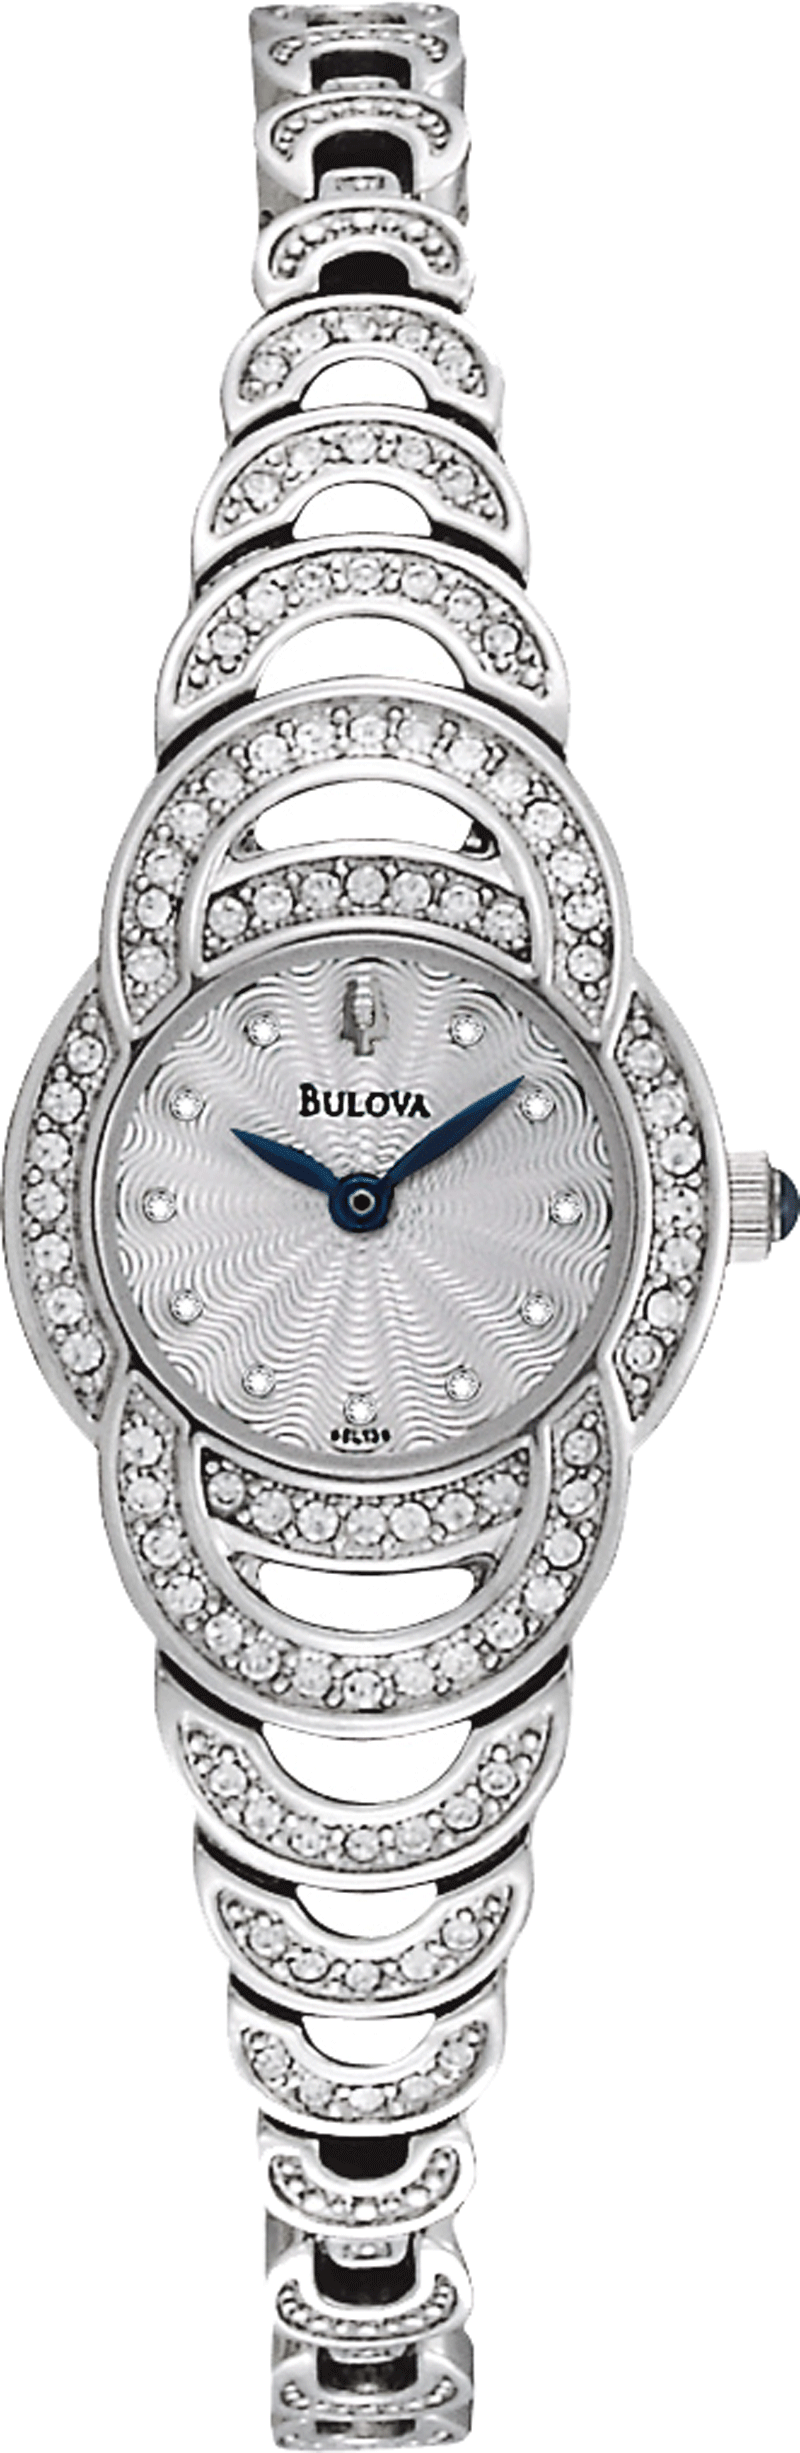 Foto Bulova Reloj de la mujer Crystal Collection 96L139